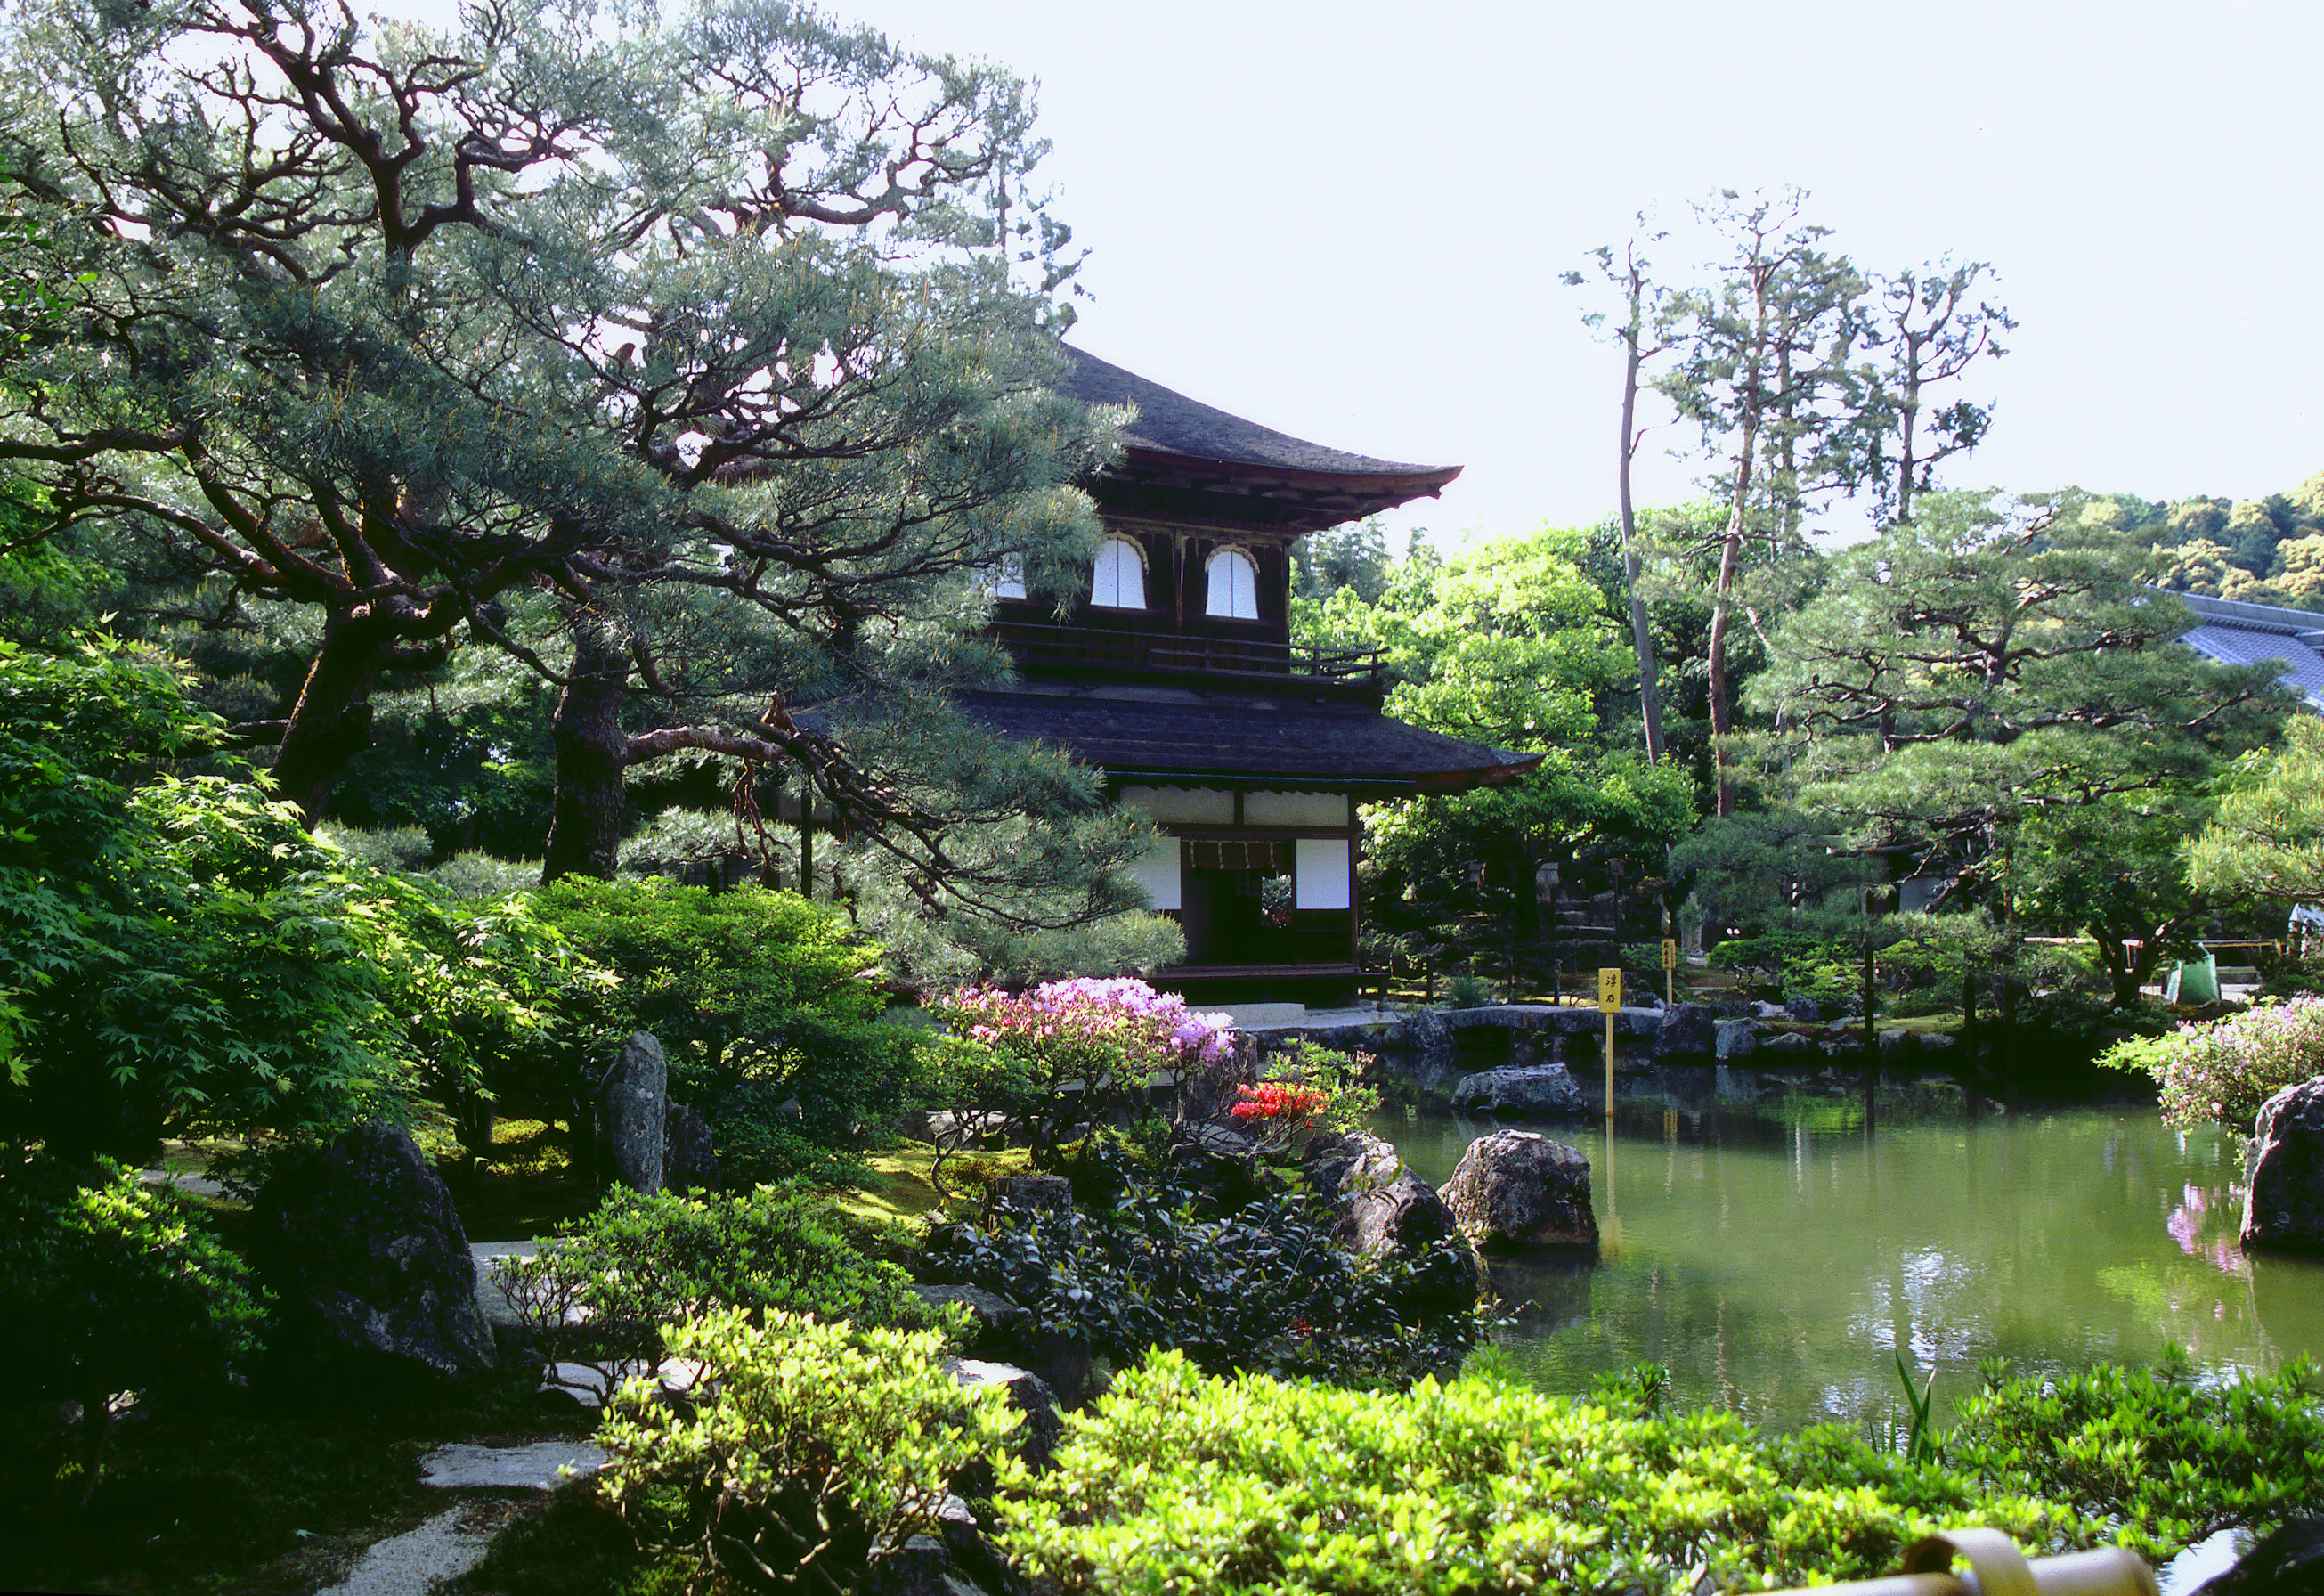 Foto, materiell, befreit, Landschaft, Bild, hat Foto auf Lager,Ginkakuji (silberner Pavillon)), Ginkakuji, Teich, Garten, Baum